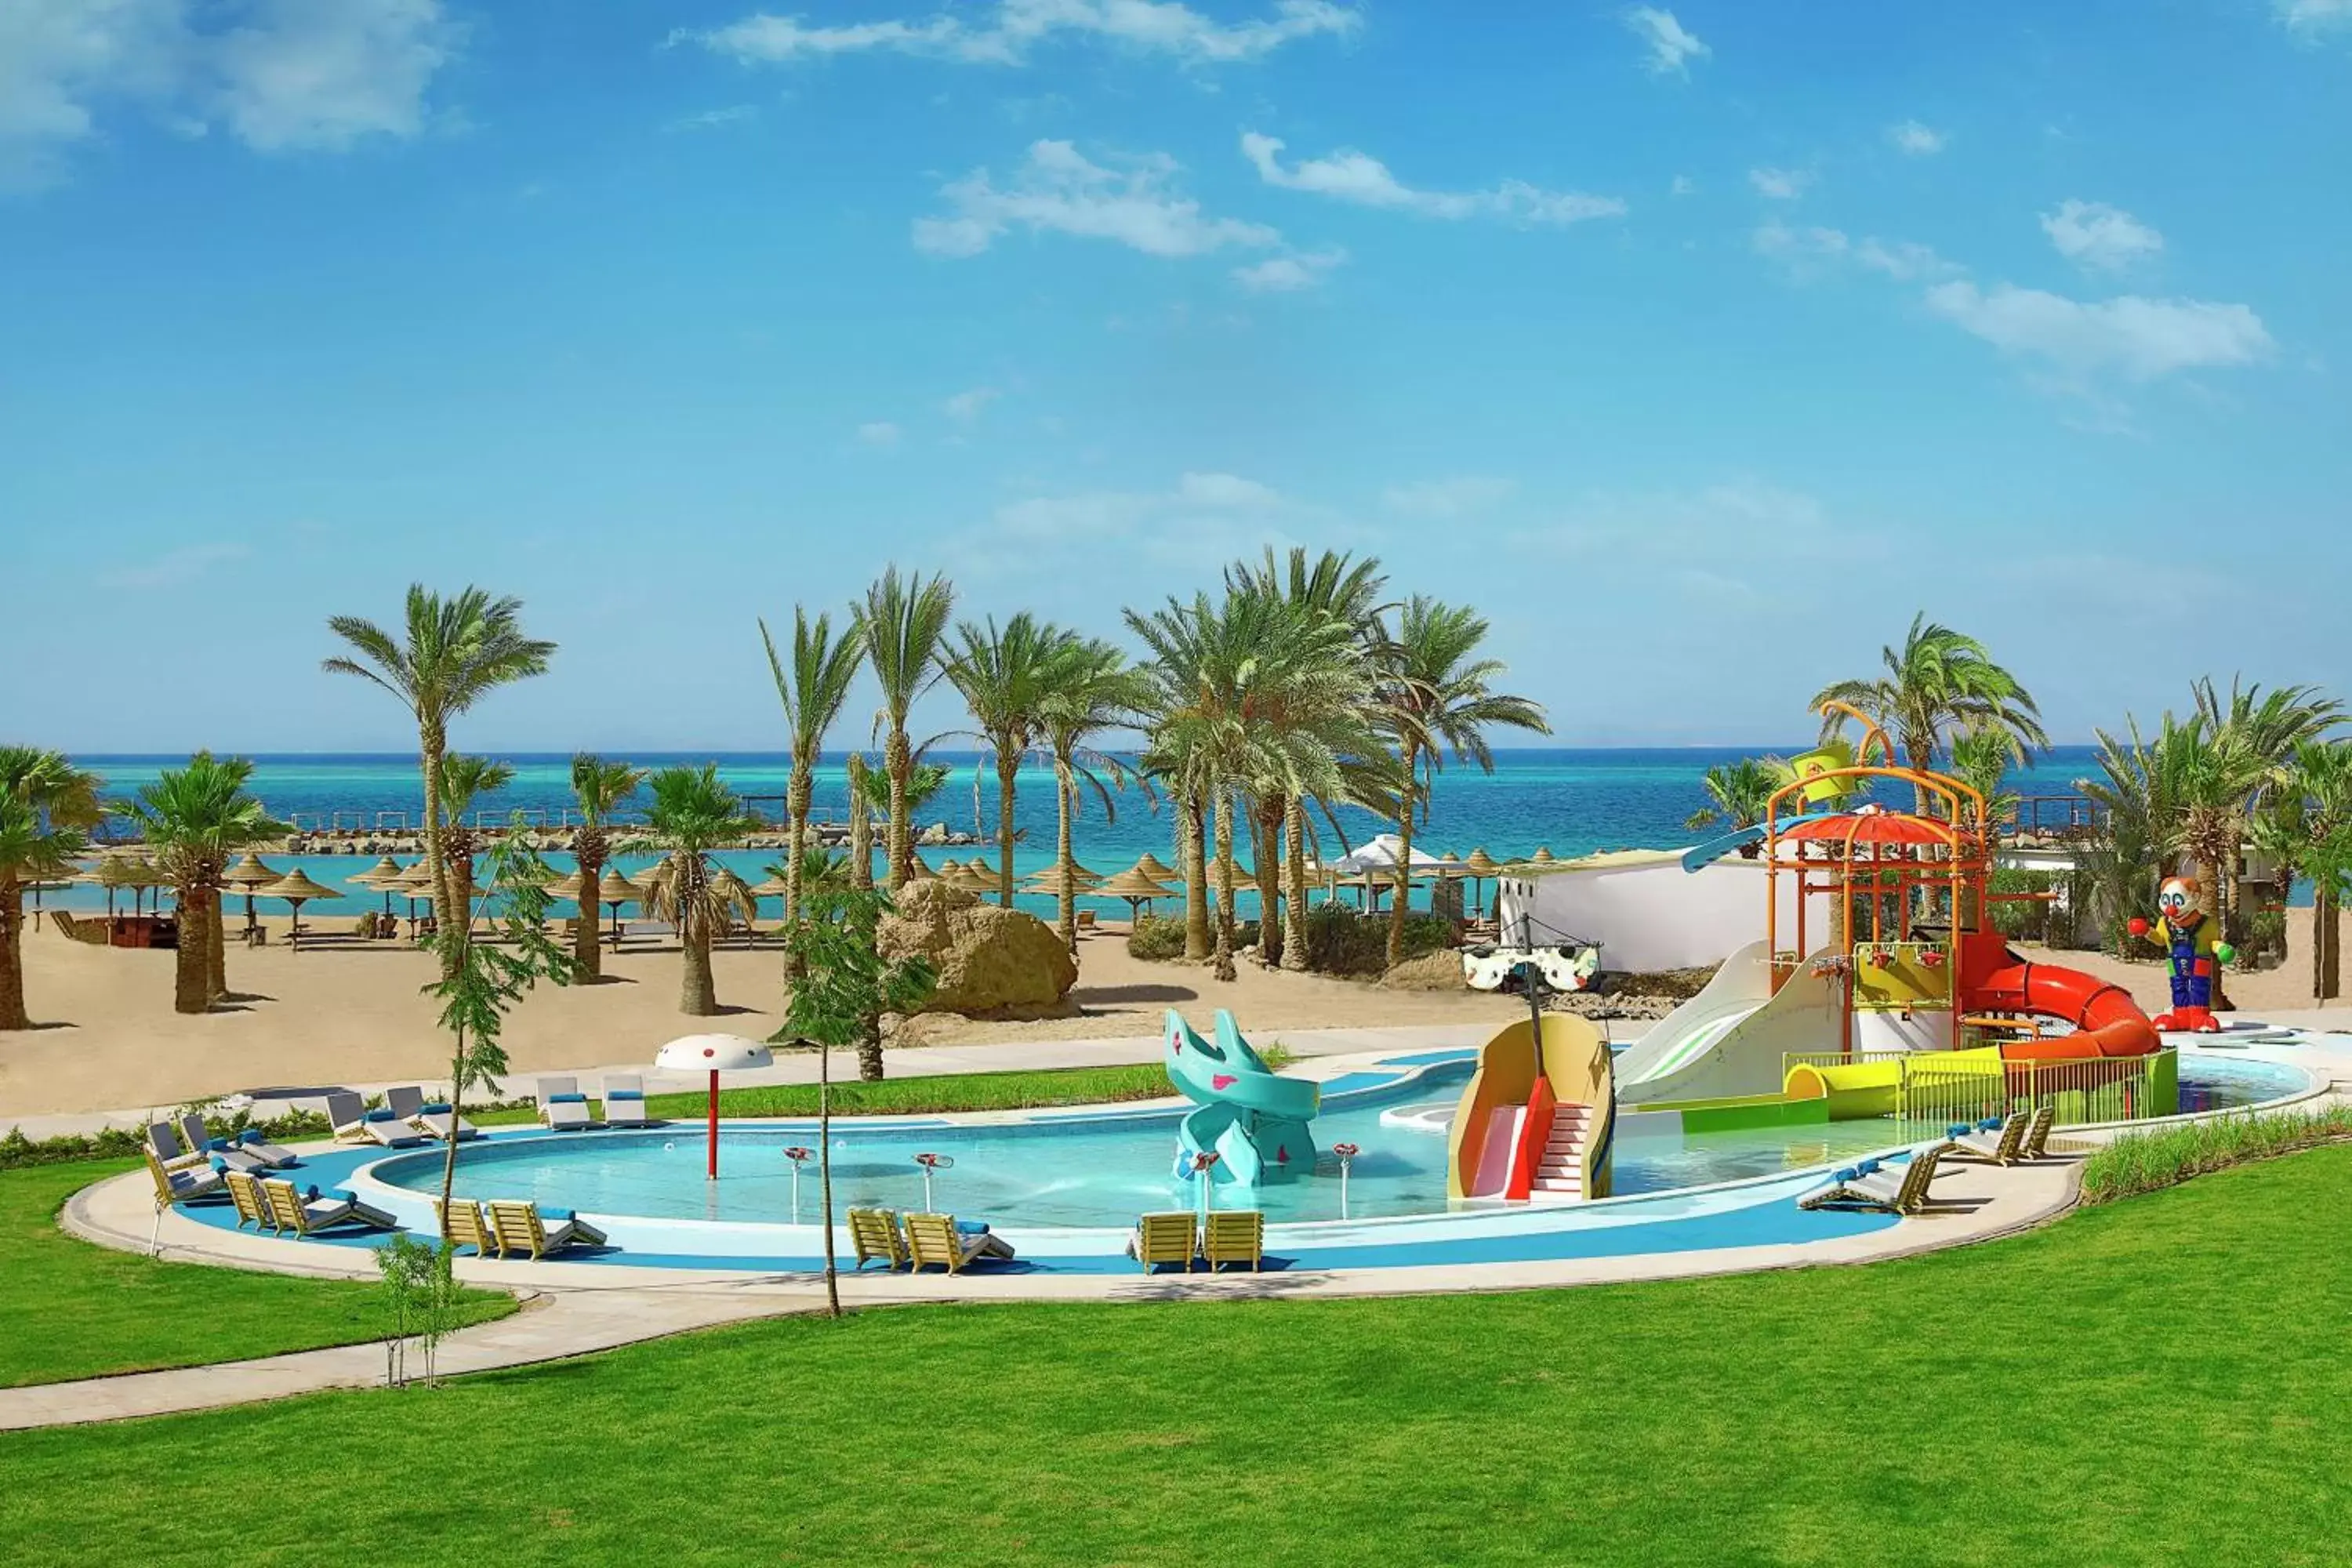 Pool view, Swimming Pool in Hilton Hurghada Plaza Hotel